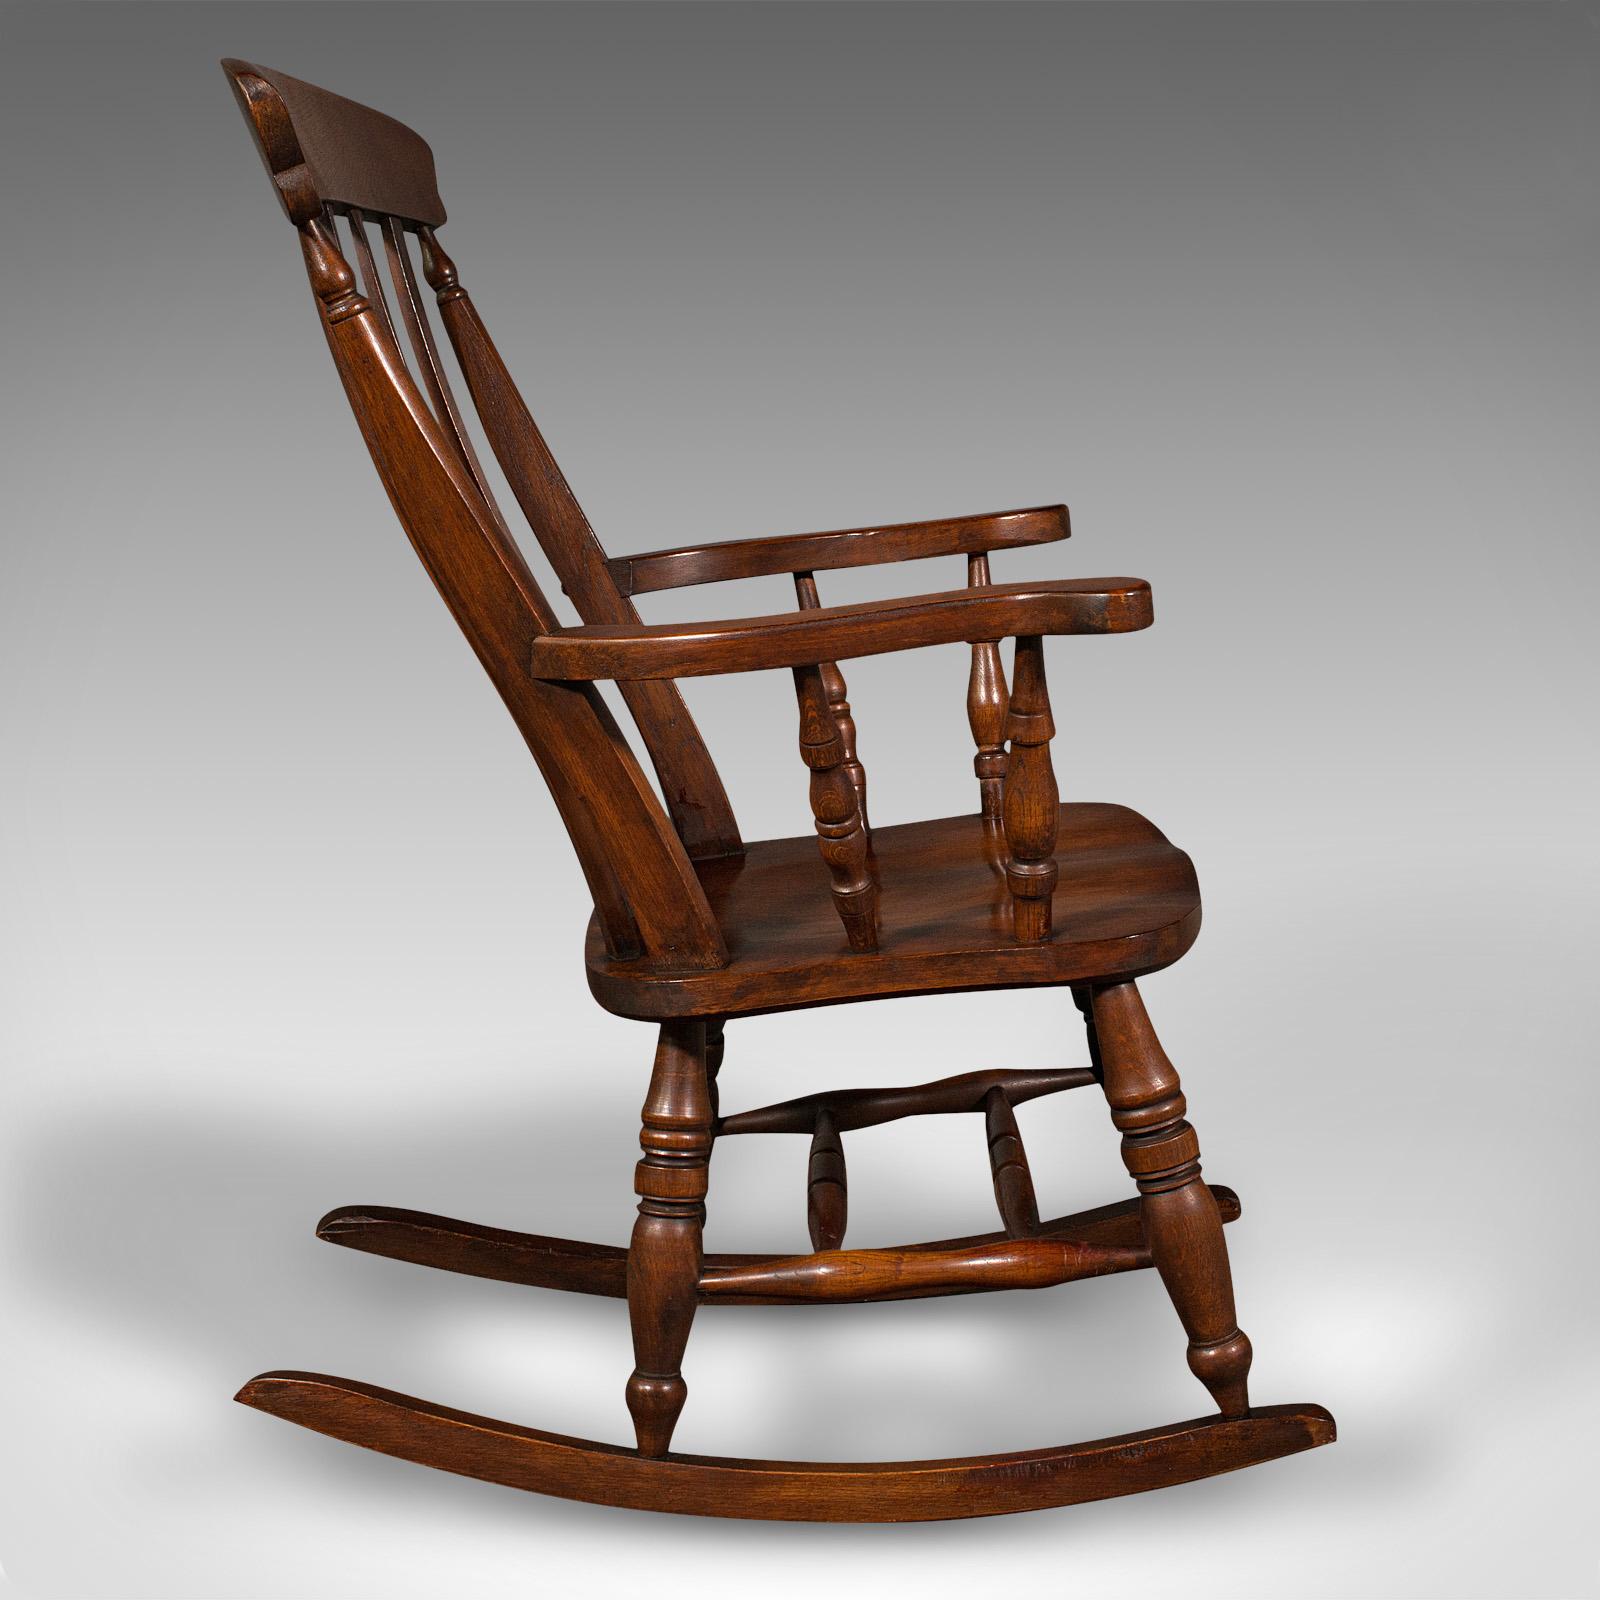 British Antique Lath Back Rocking Chair, English Oak, Beech, Elbow Seat, Victorian, 1900